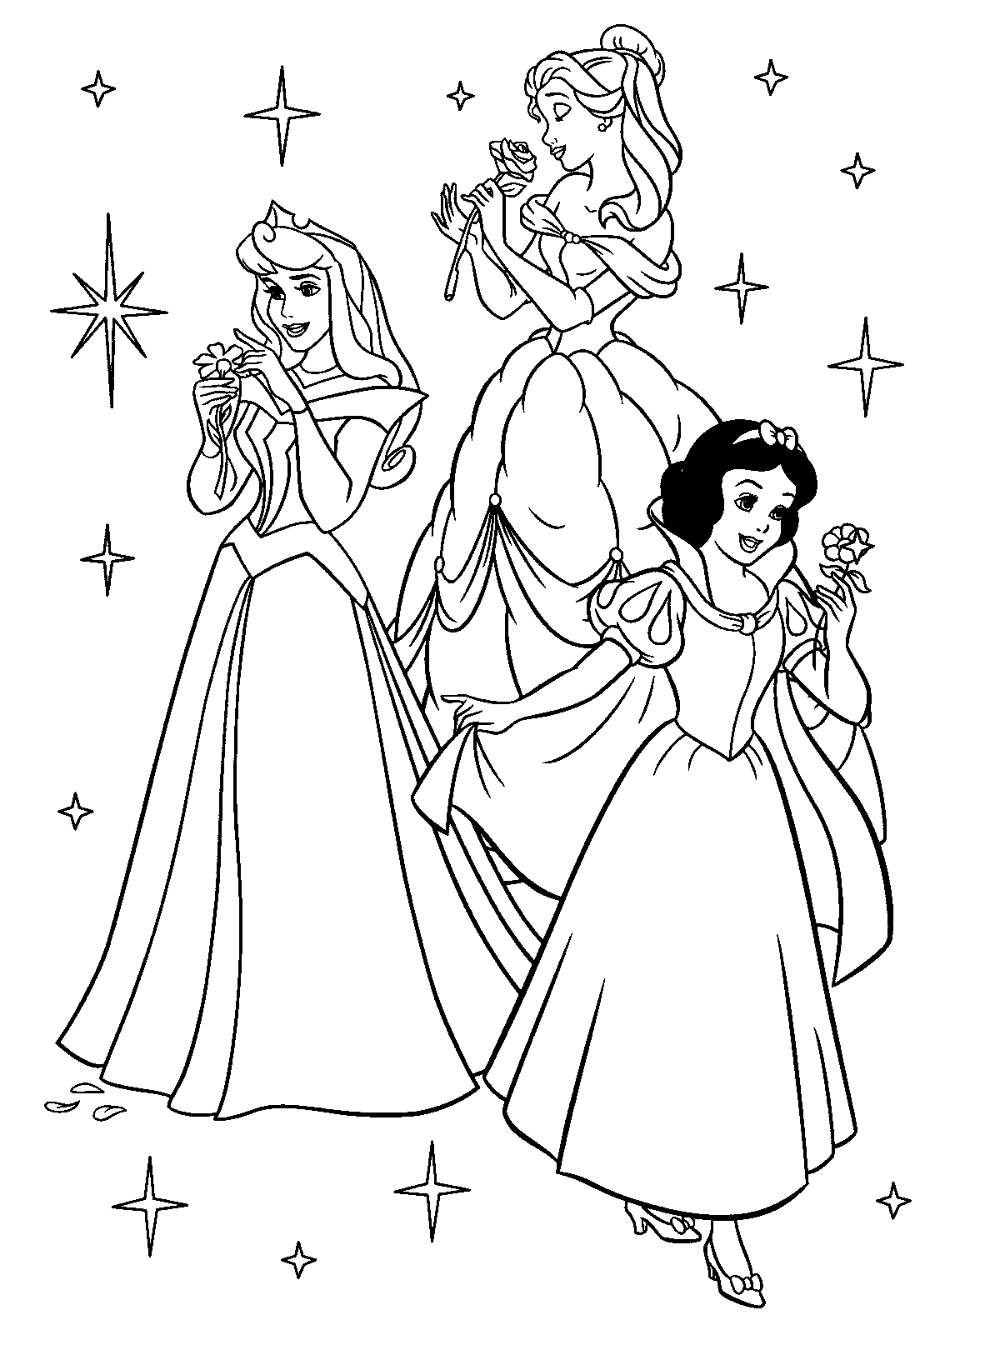 Free printable disney princess coloring pages for kids disney princess coloring pages princess coloring pages disney princess colors